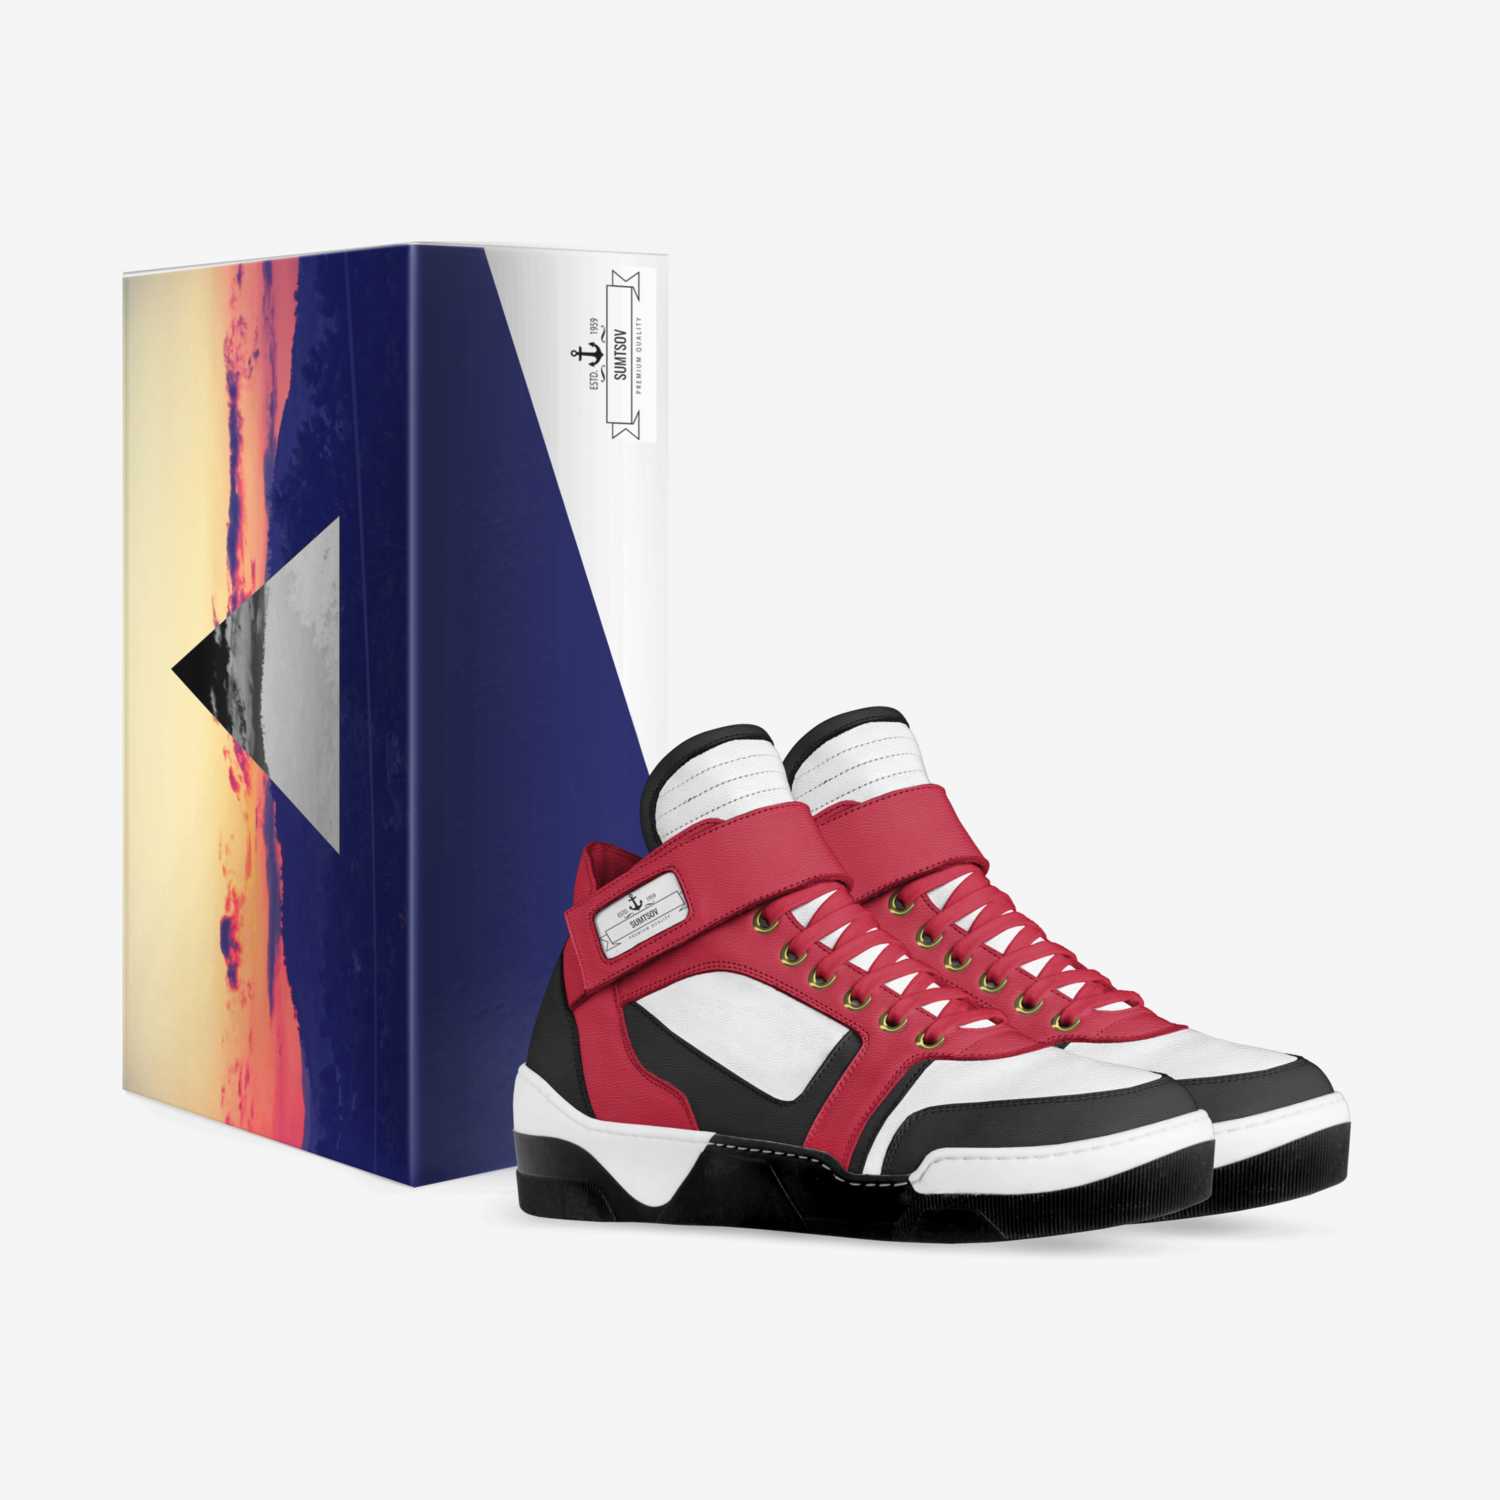 Anton Sumtsov custom made in Italy shoes by Anton Sumtsov | Box view